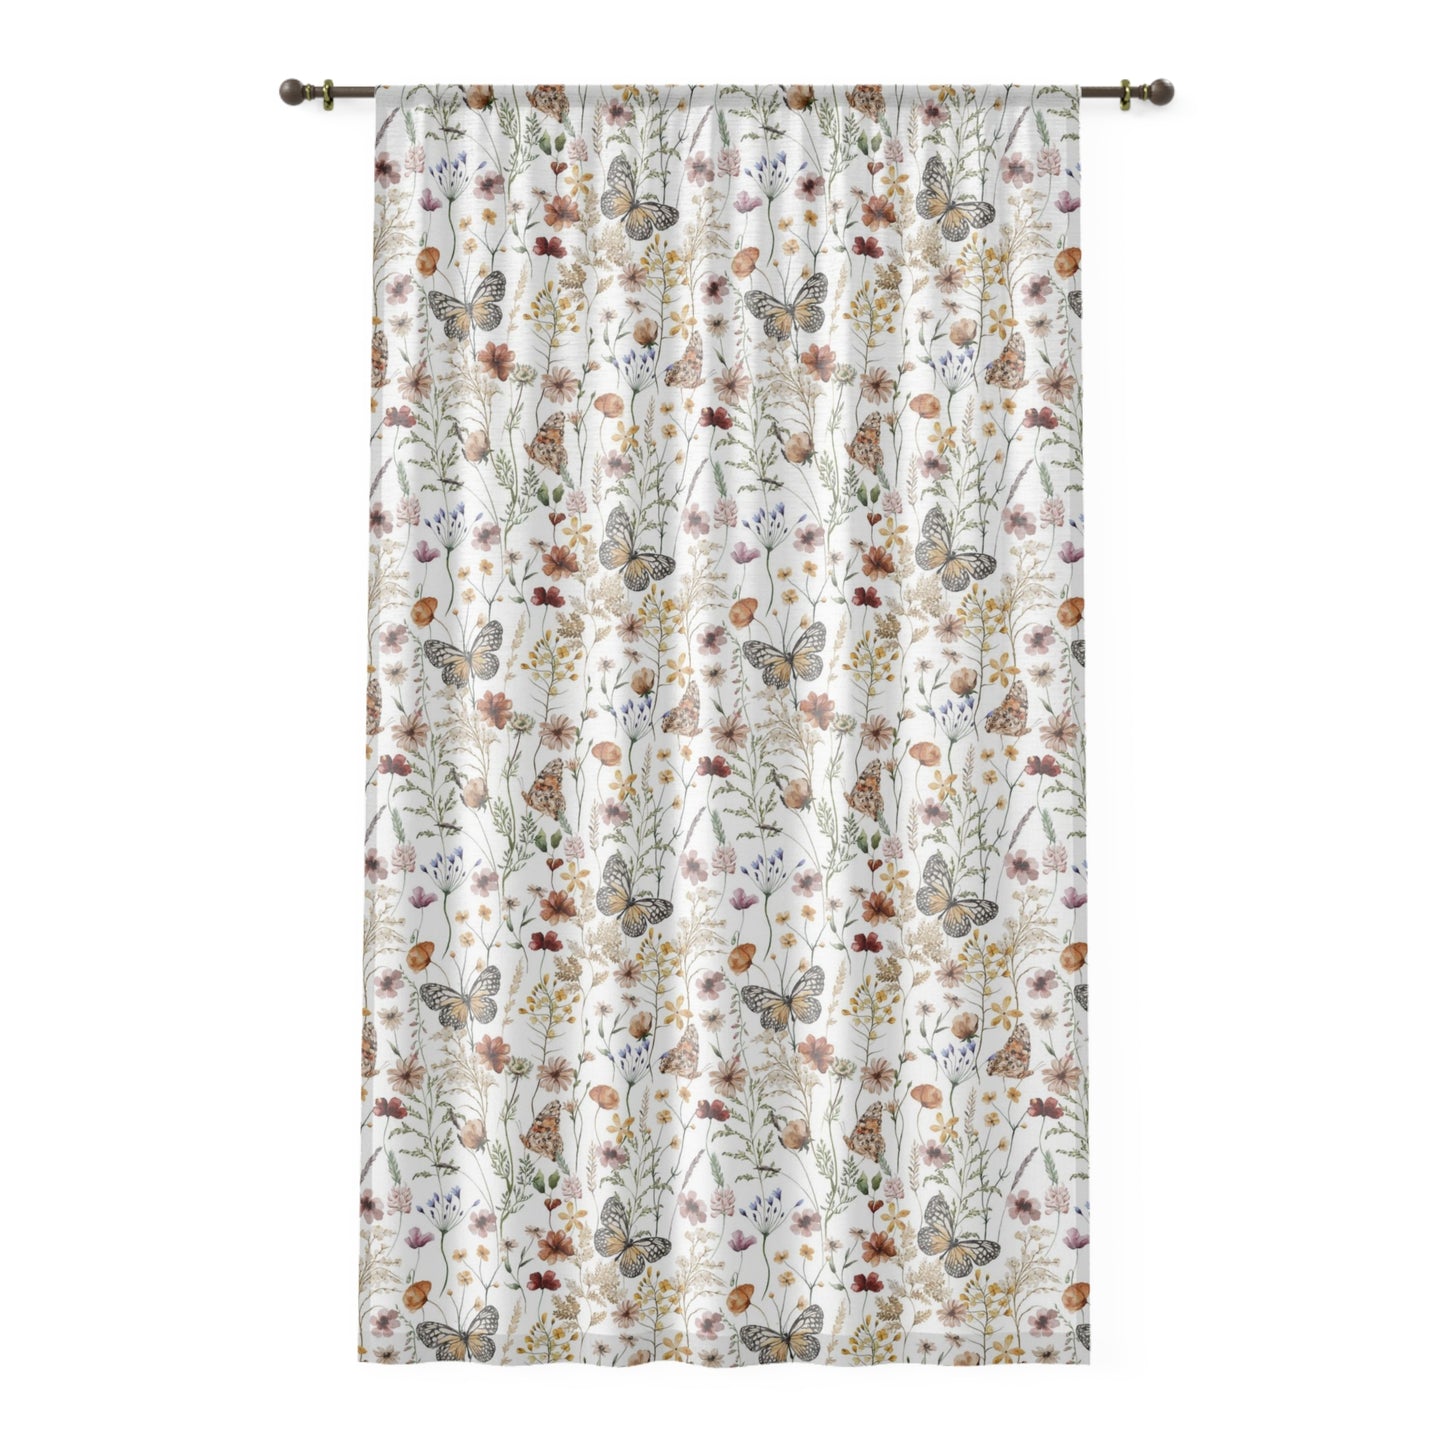 Wildflowers sheer curtain, single panel | Vintage floral nursery decor - Butterfly Garden